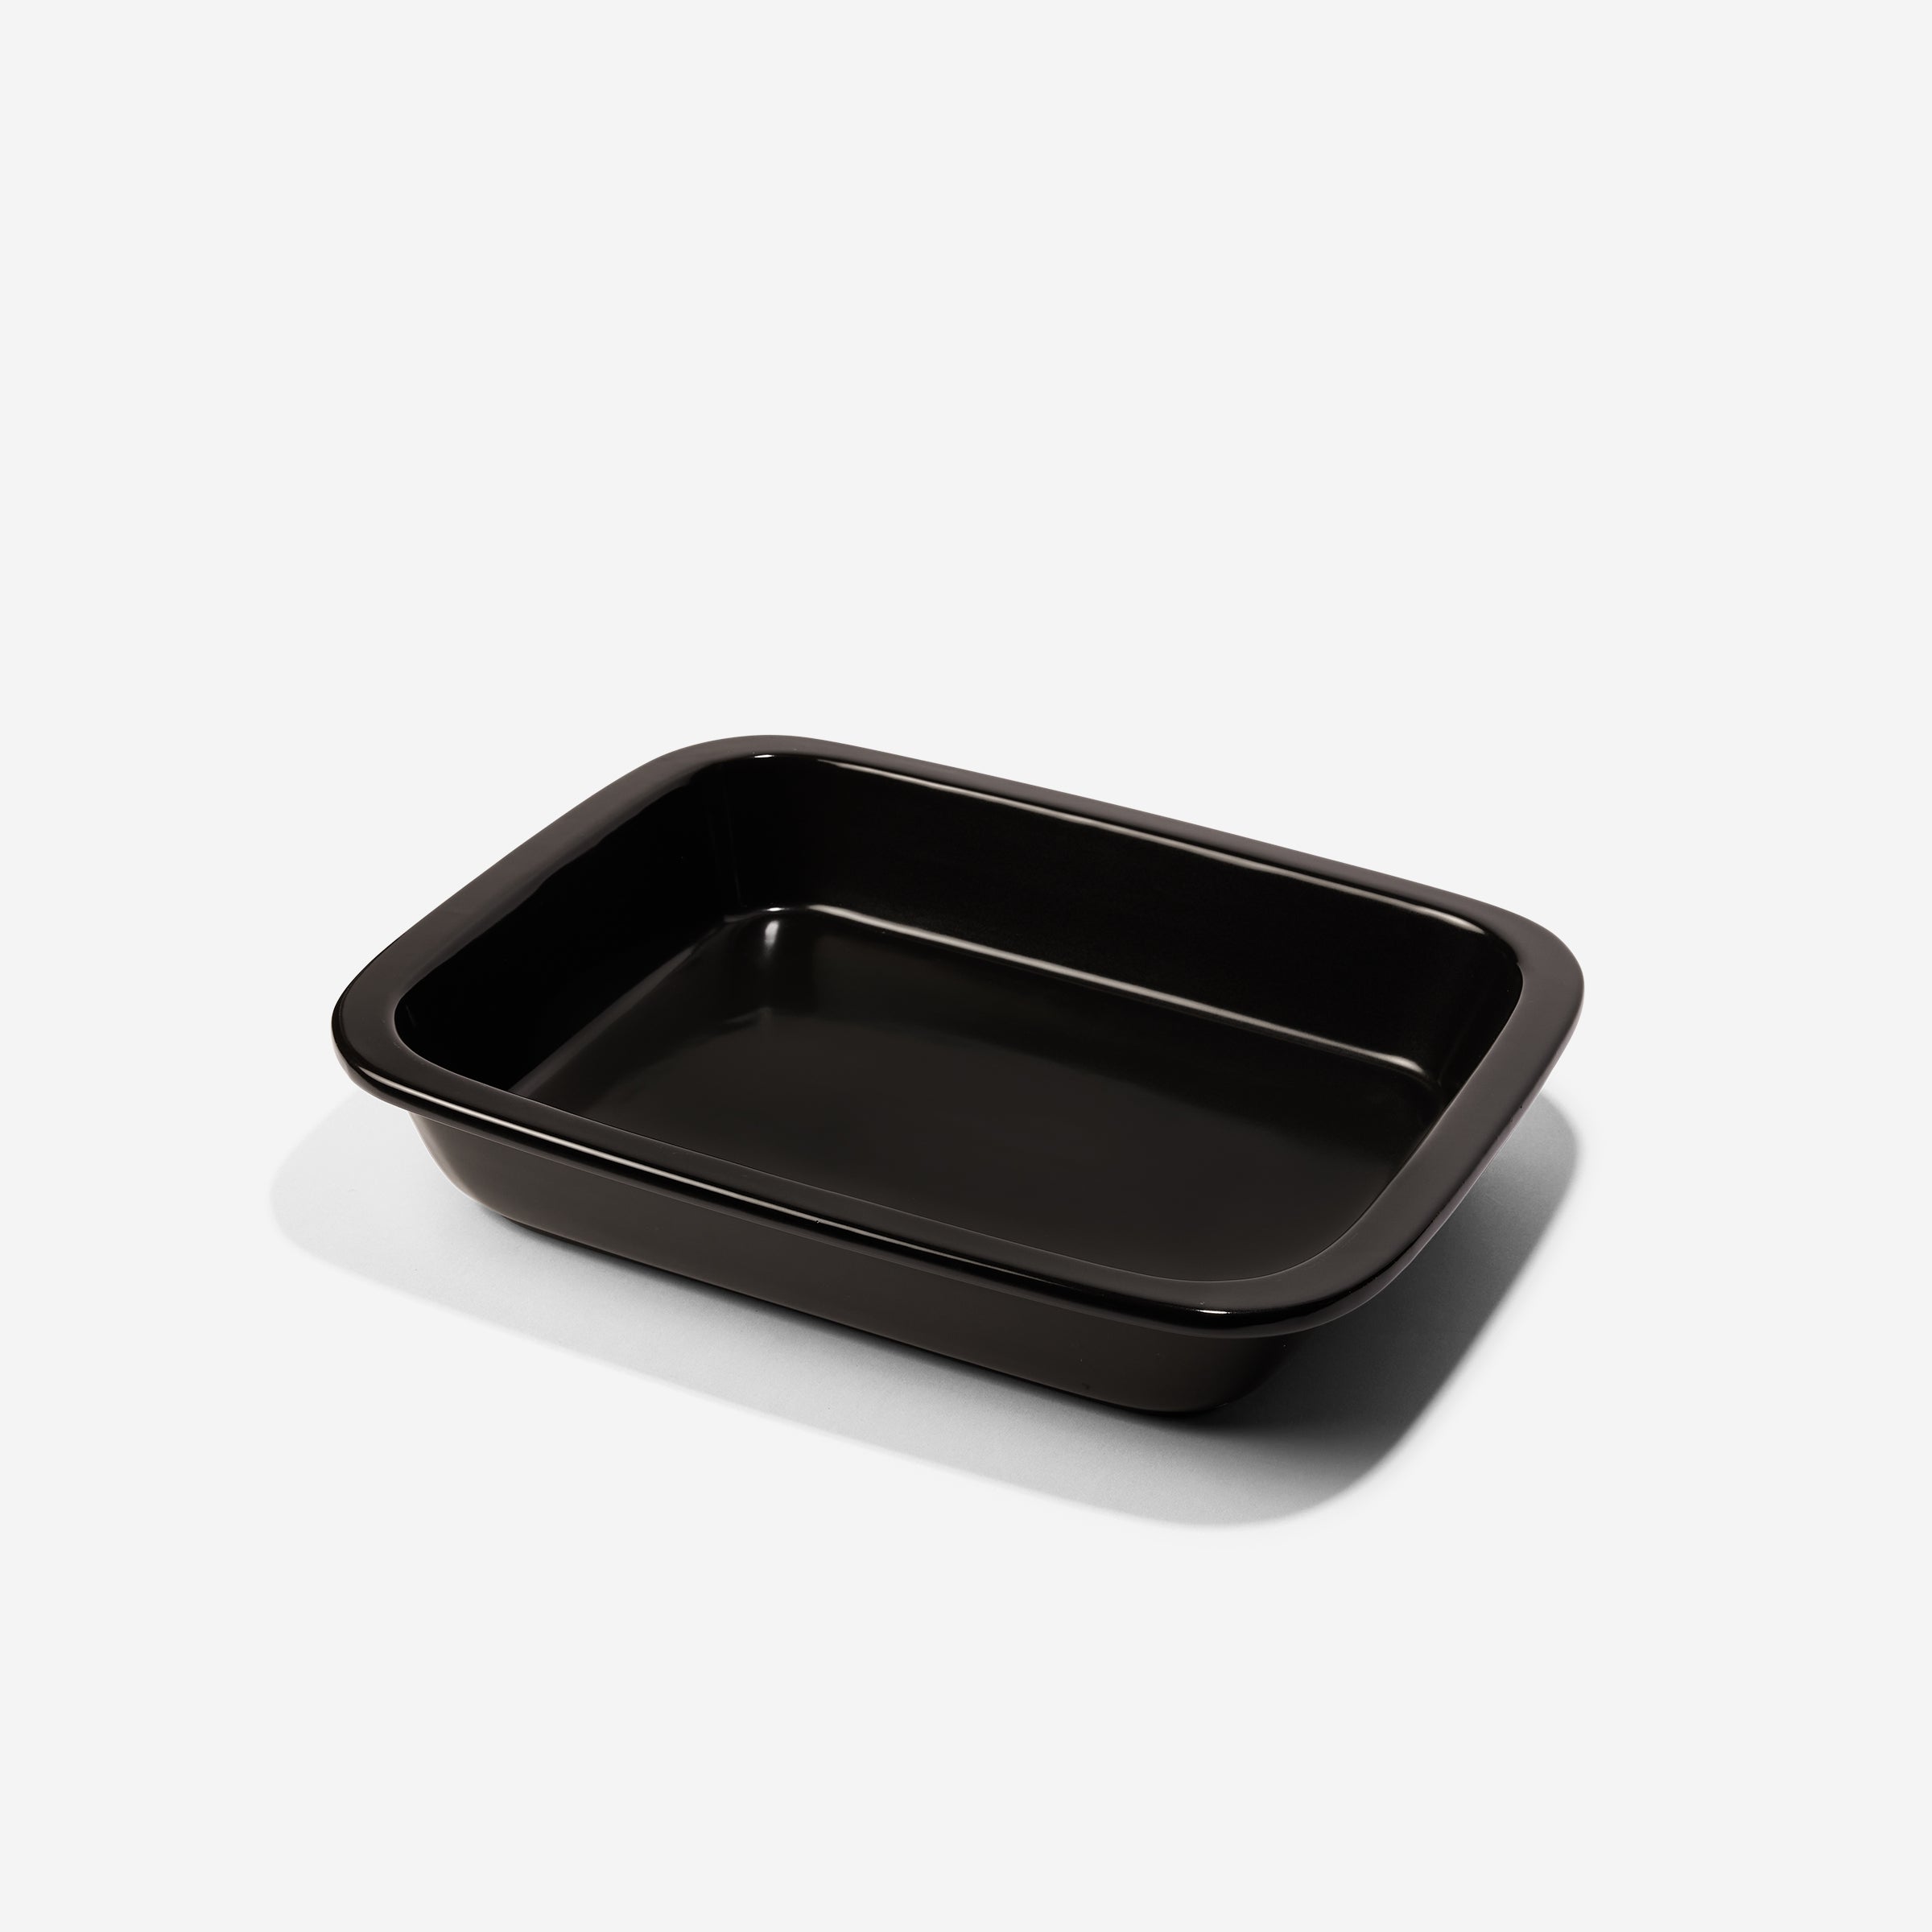 2 to 6-Quart Ceramic Rectangular Baking Dish | Xtrema Bakeware 4-Quart